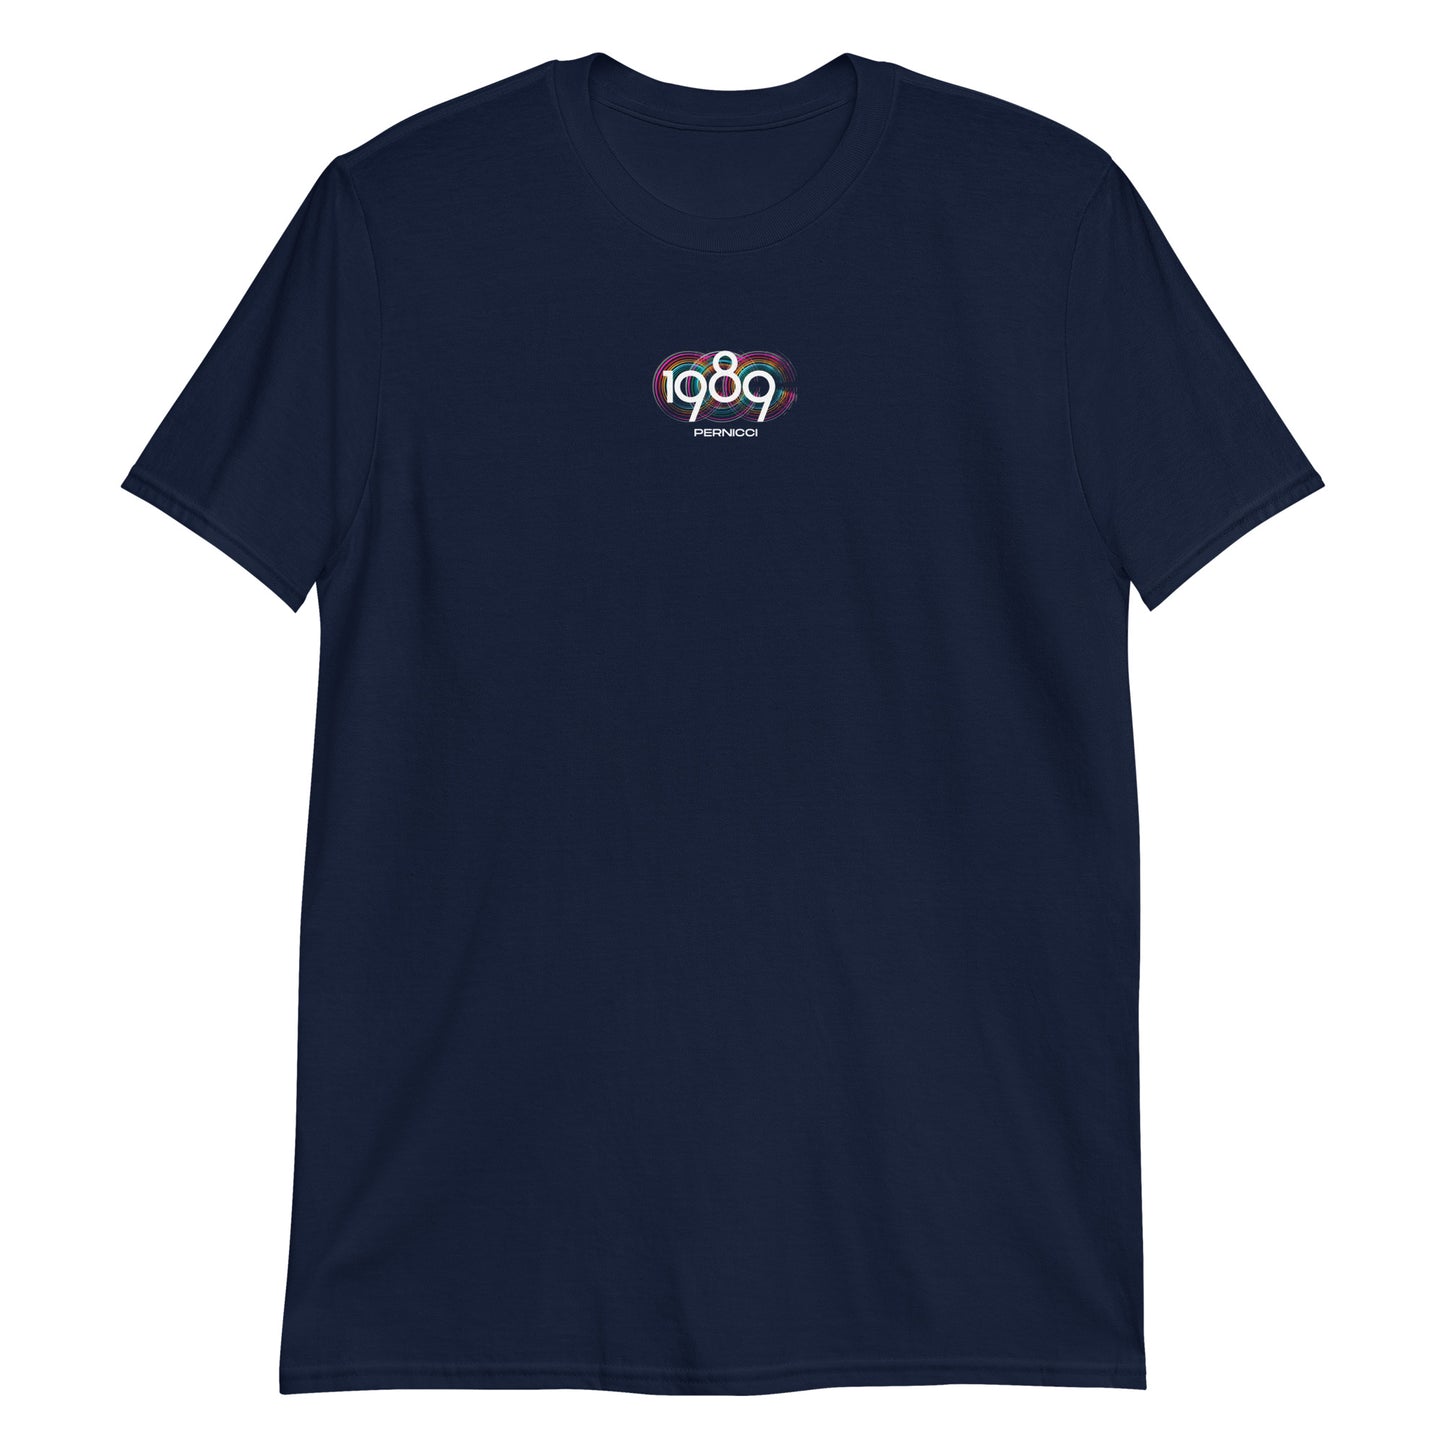 Short-Sleeve Unisex T-Shirt 1989 circle colors